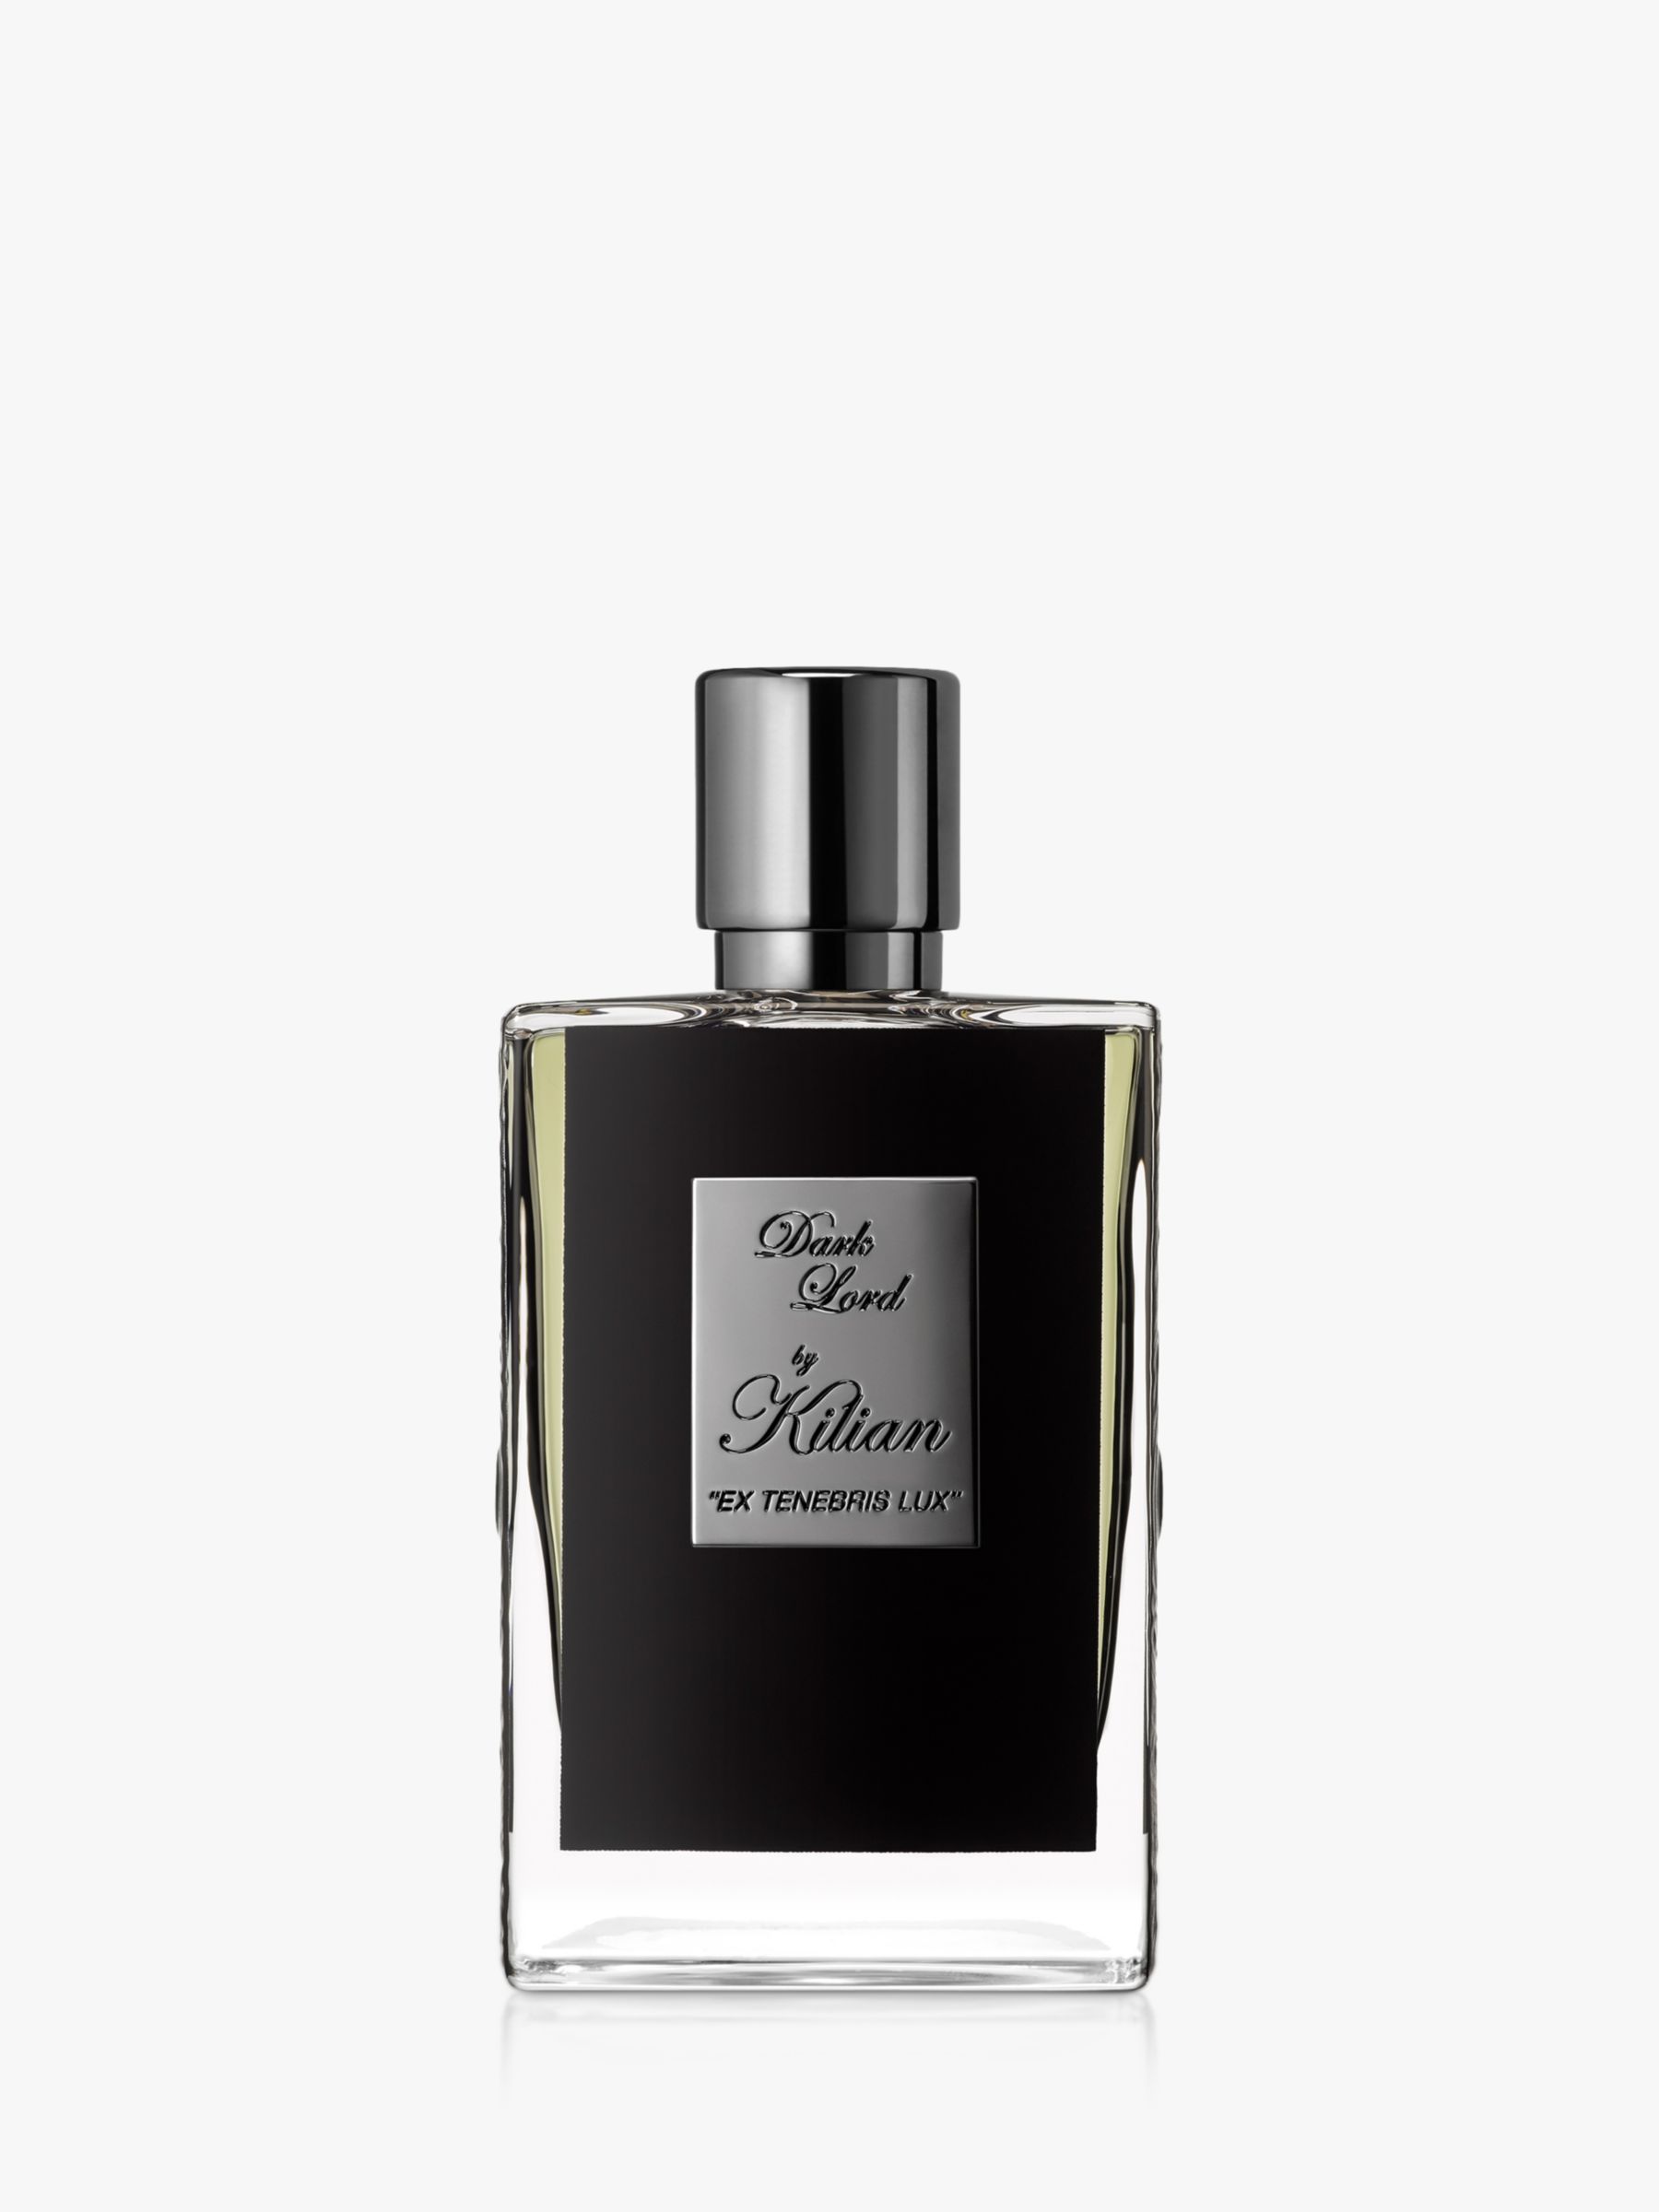 KILIAN PARIS Dark Lord 'Ex Tenebris Lux' Eau de Parfum, 50ml 1